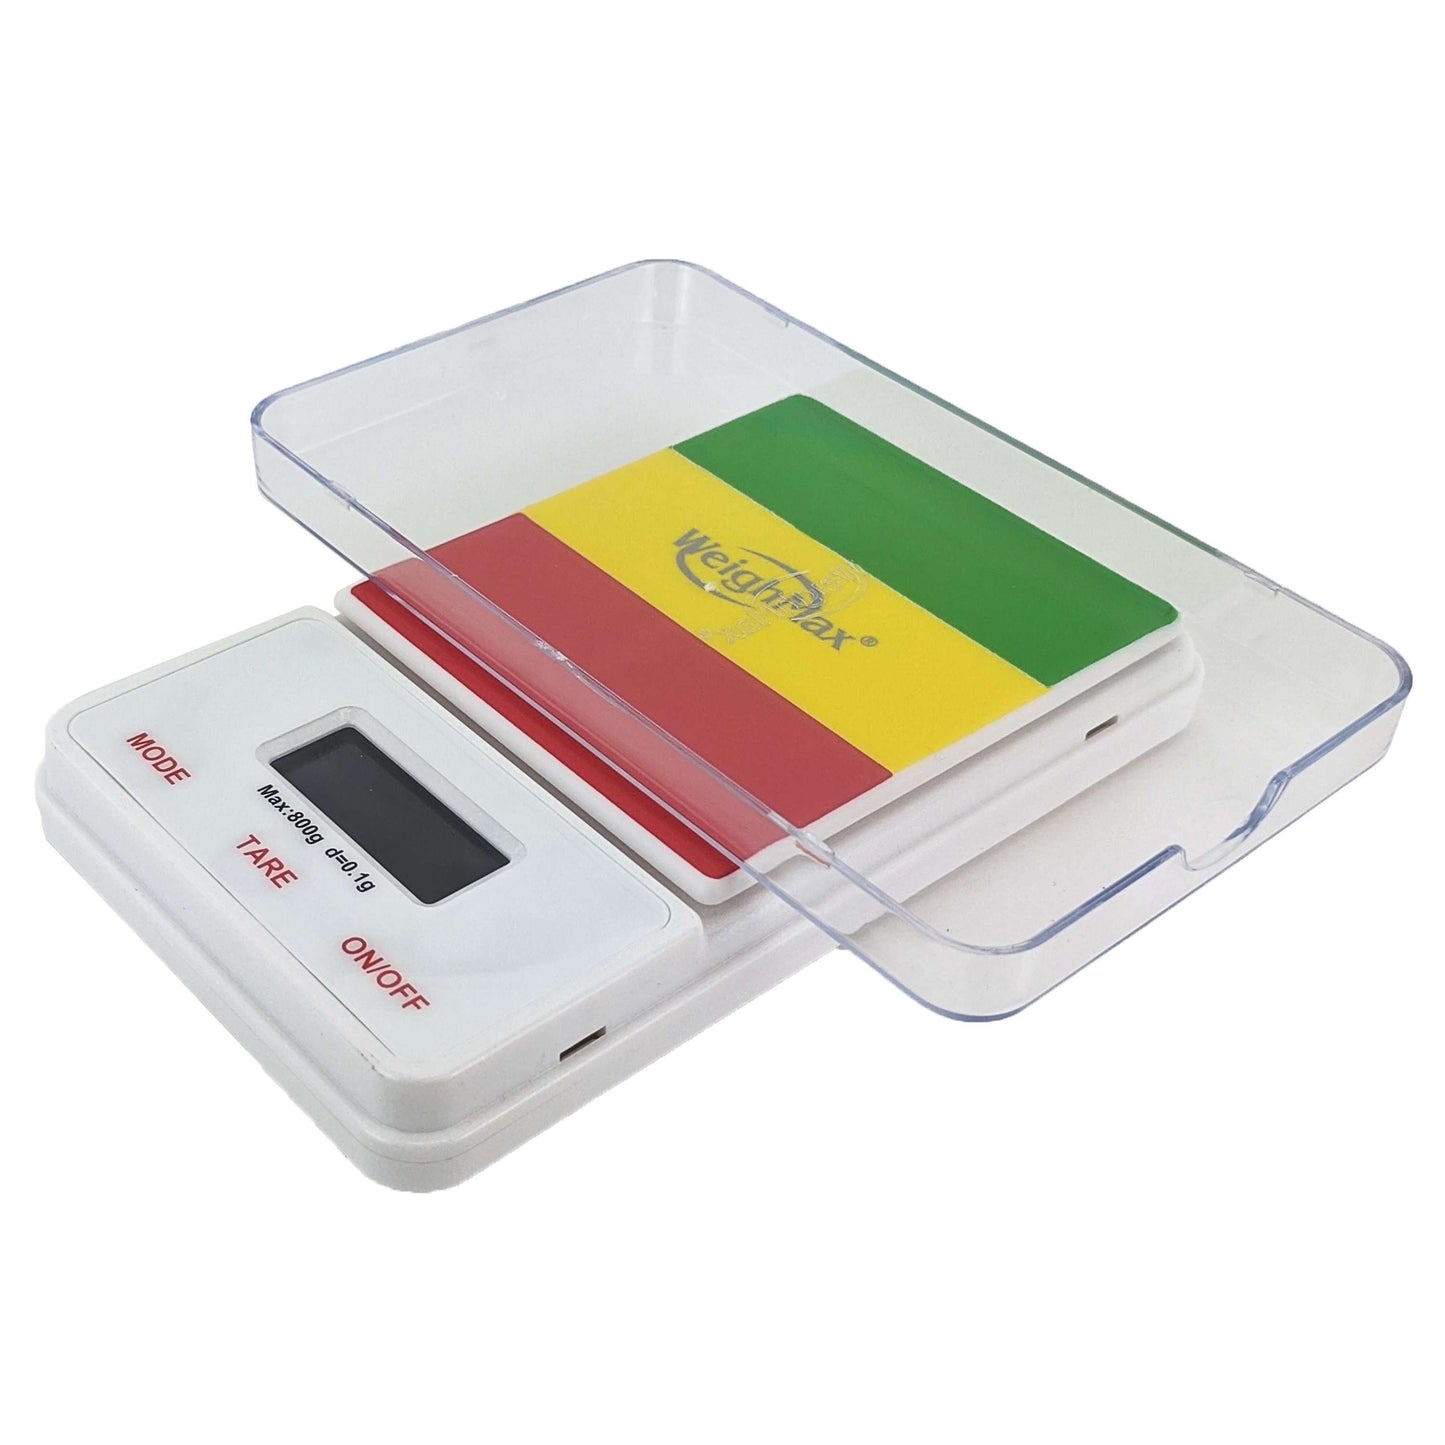 WeighMax Ninja Pocket Scale 800g x 0.1g RA-800 - Rasta